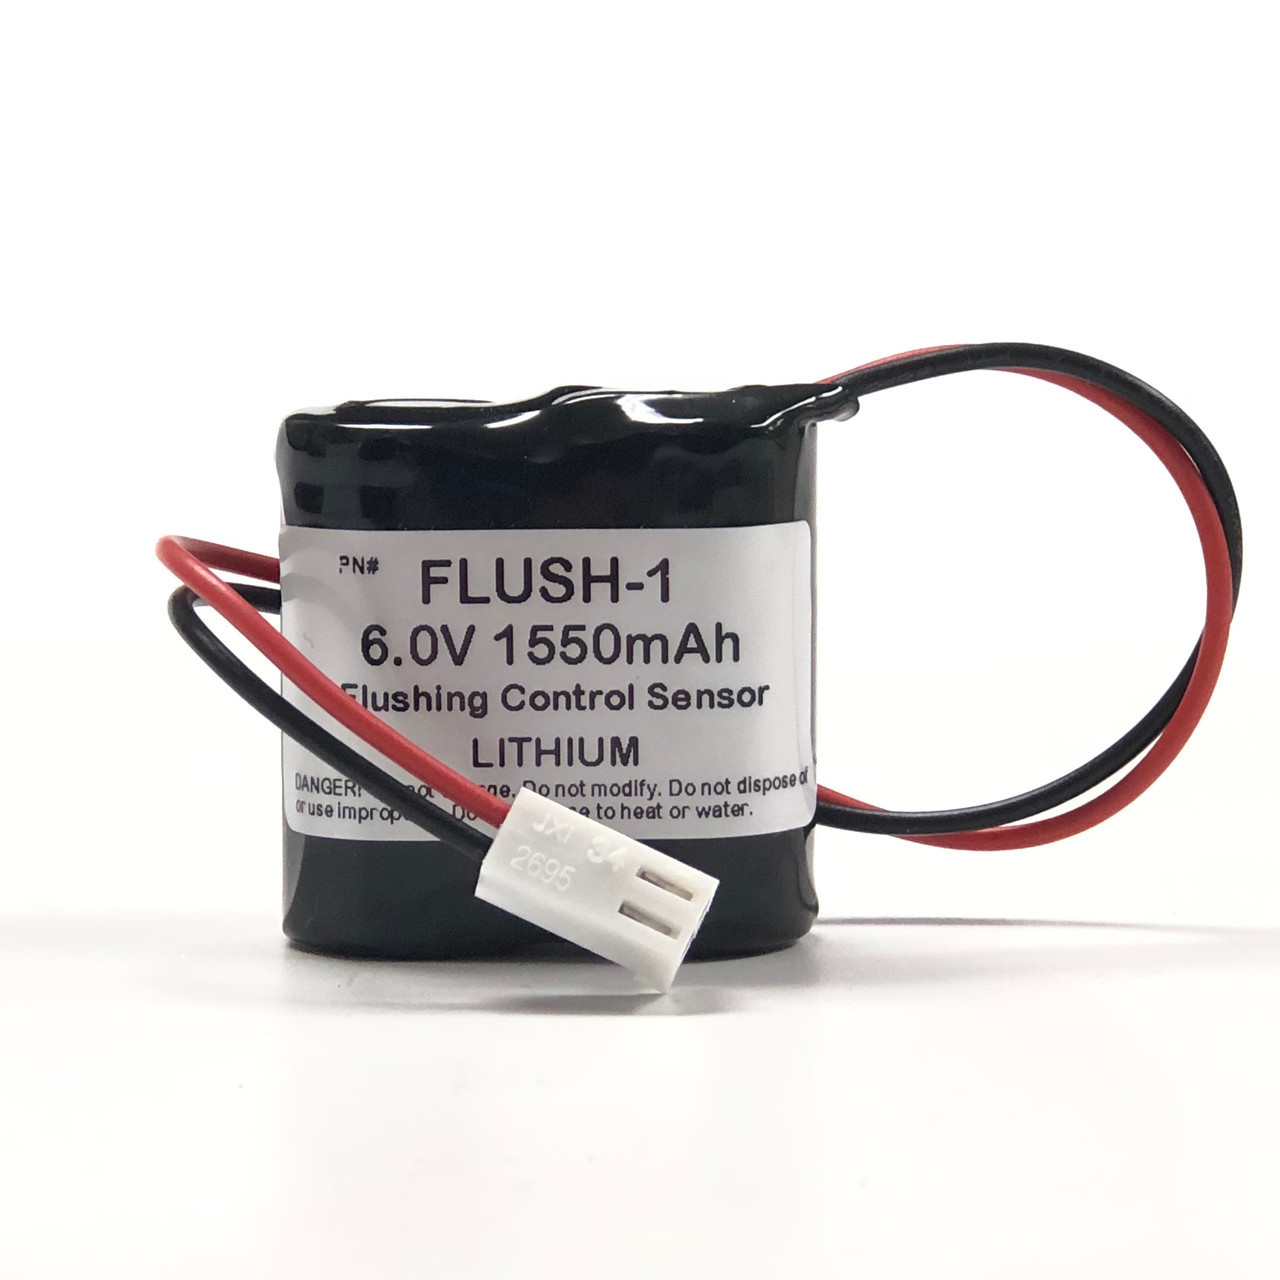 Flush-1 Flushing Control Sensor Battery